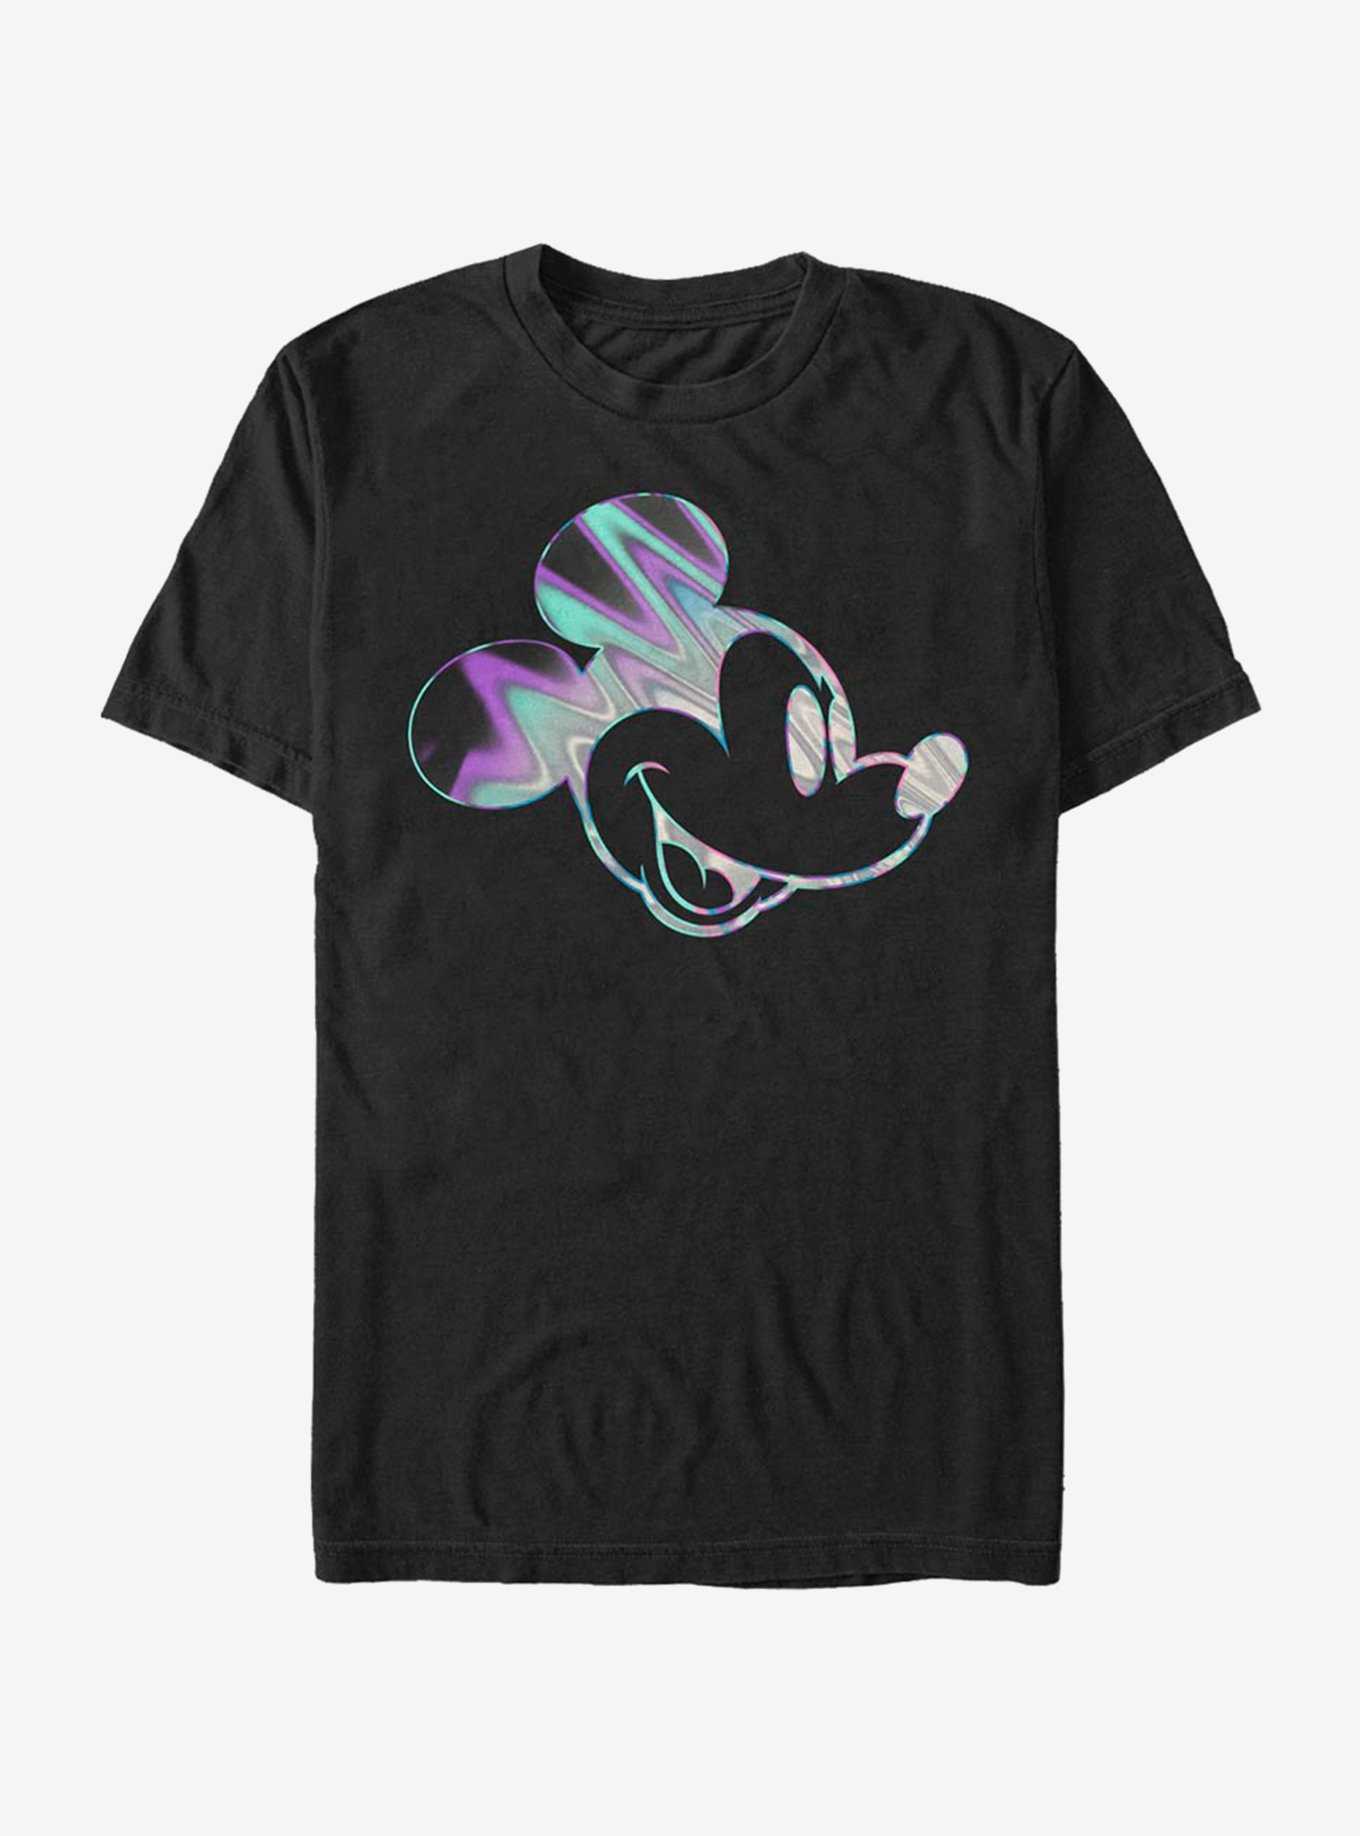 Disney Mickey Mouse Neon Slick Mick T-Shirt, , hi-res